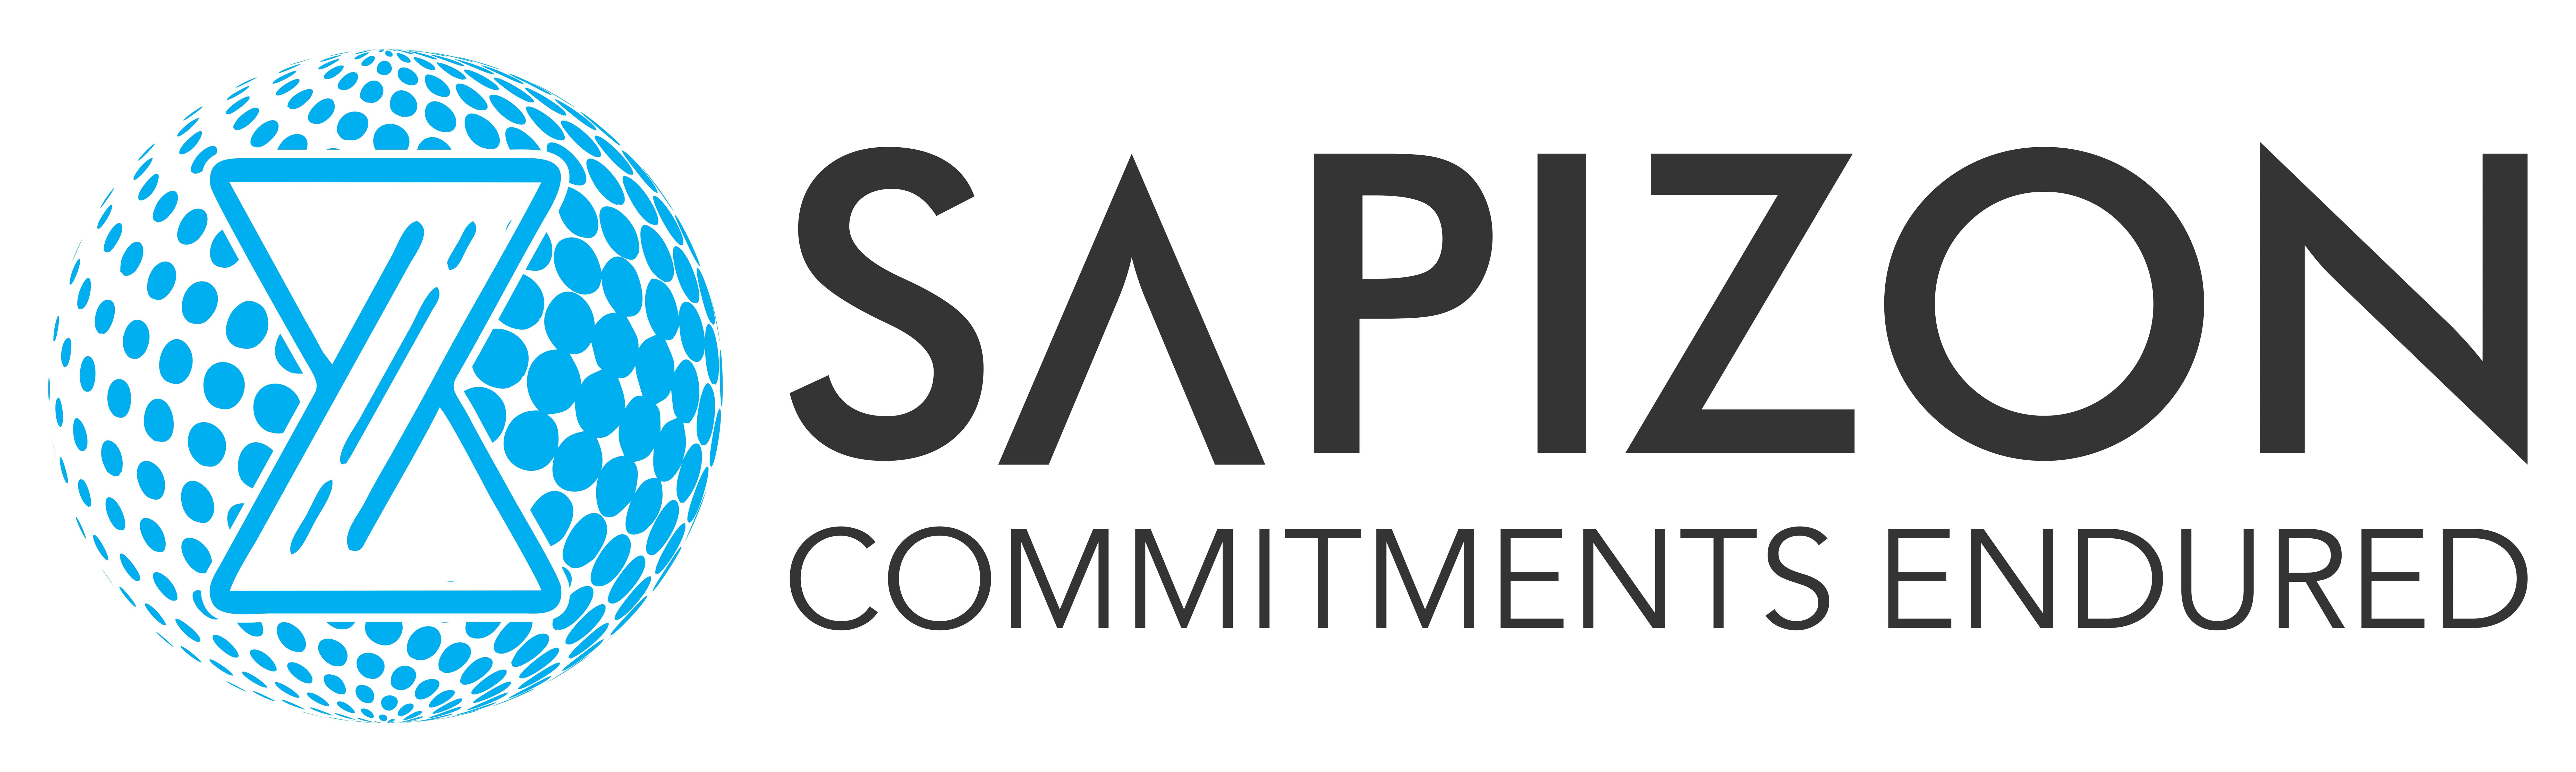 Sapizon Technologies profile on Qualified.One